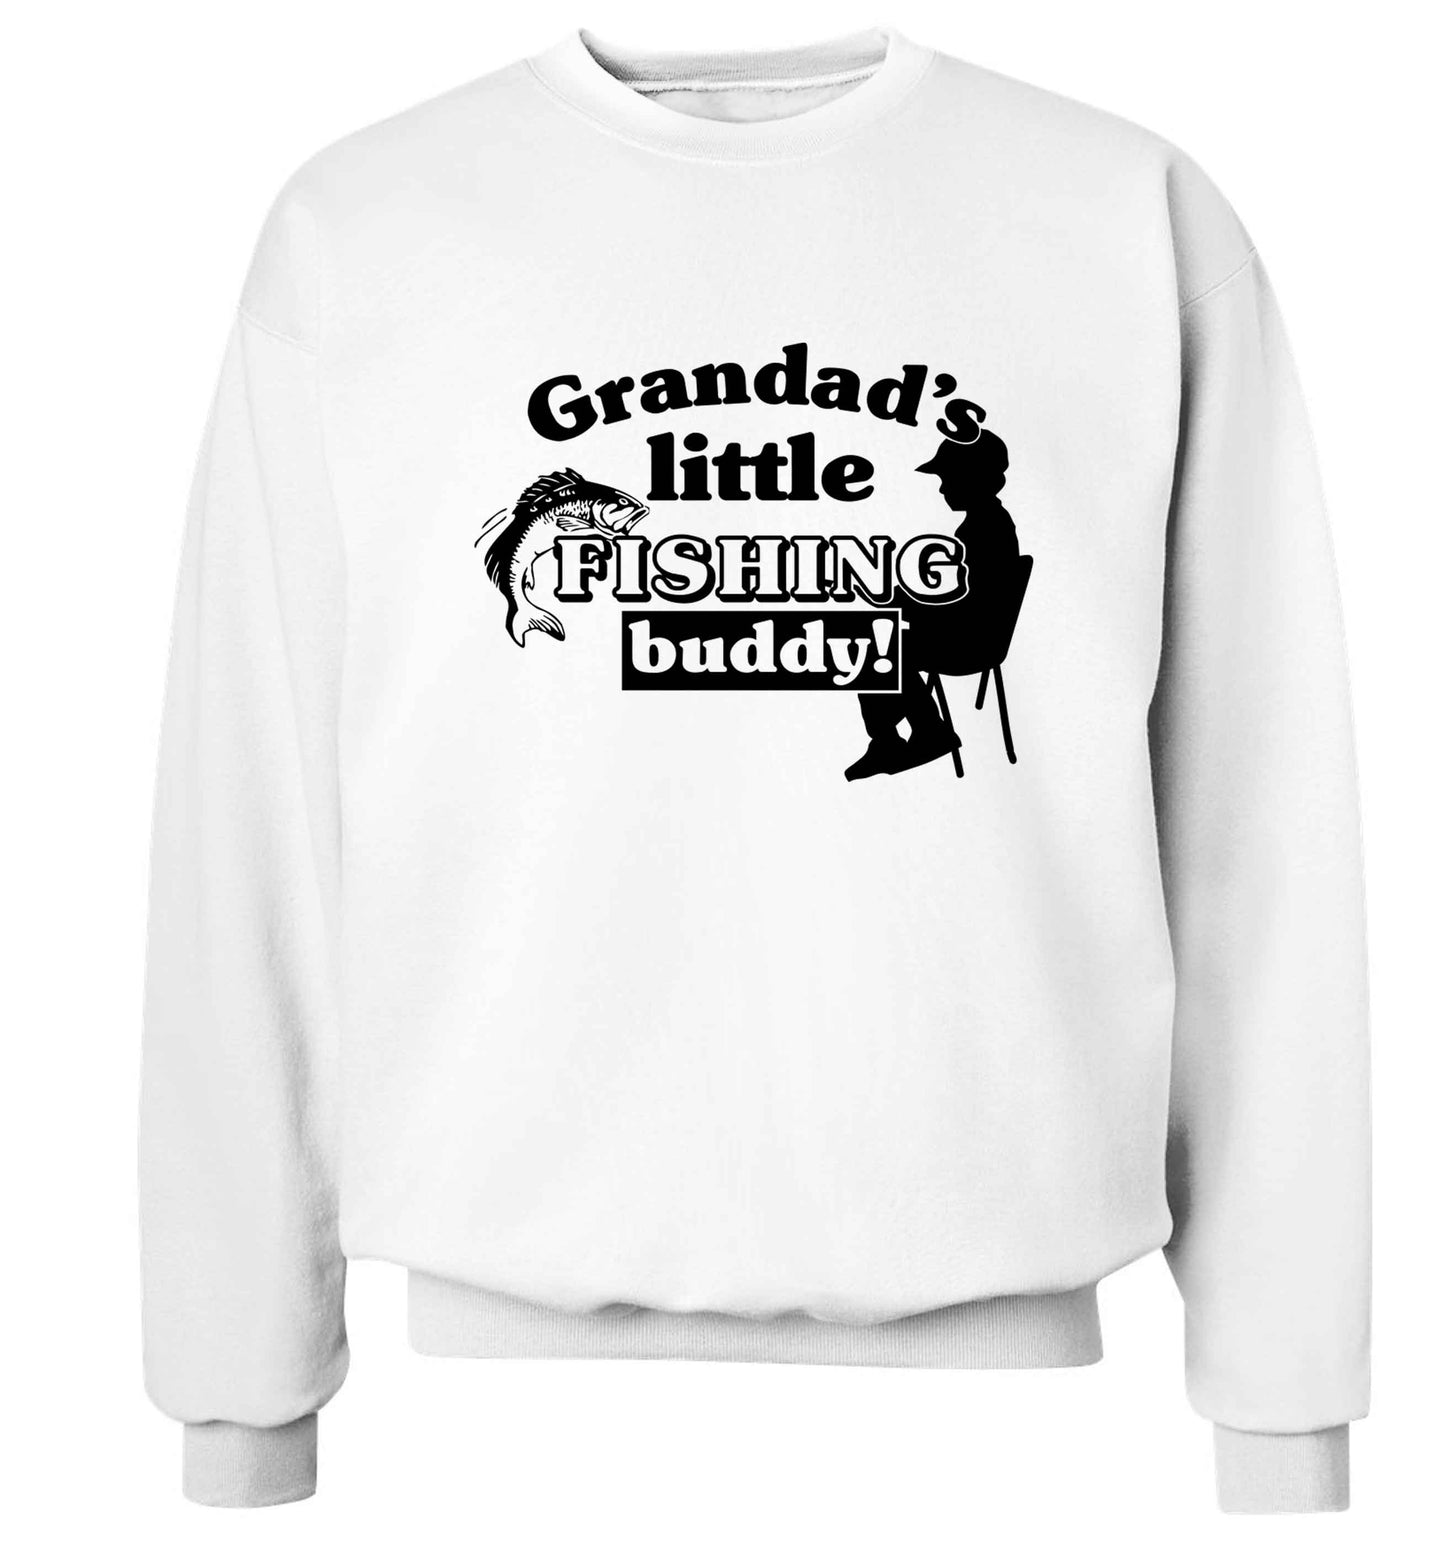 Grandad's little fishing buddy! Adult's unisex white Sweater 2XL